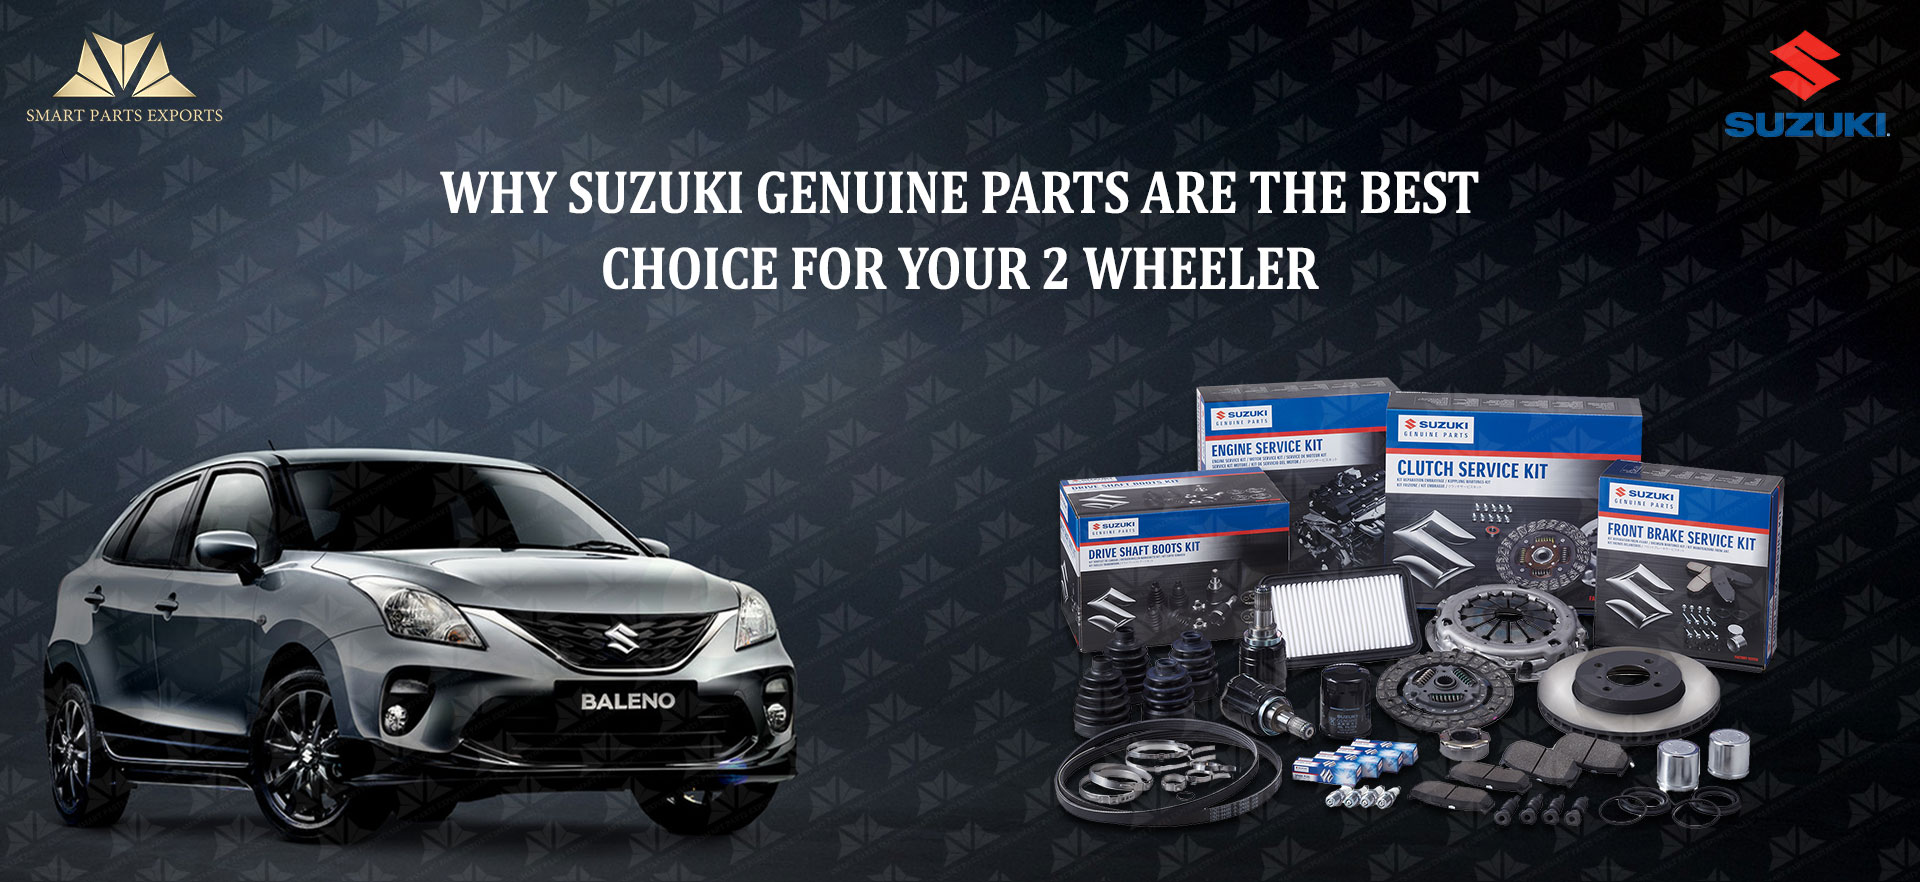 Why Suzuki Genuine Parts Are the Best Choice for 2 Wheeler